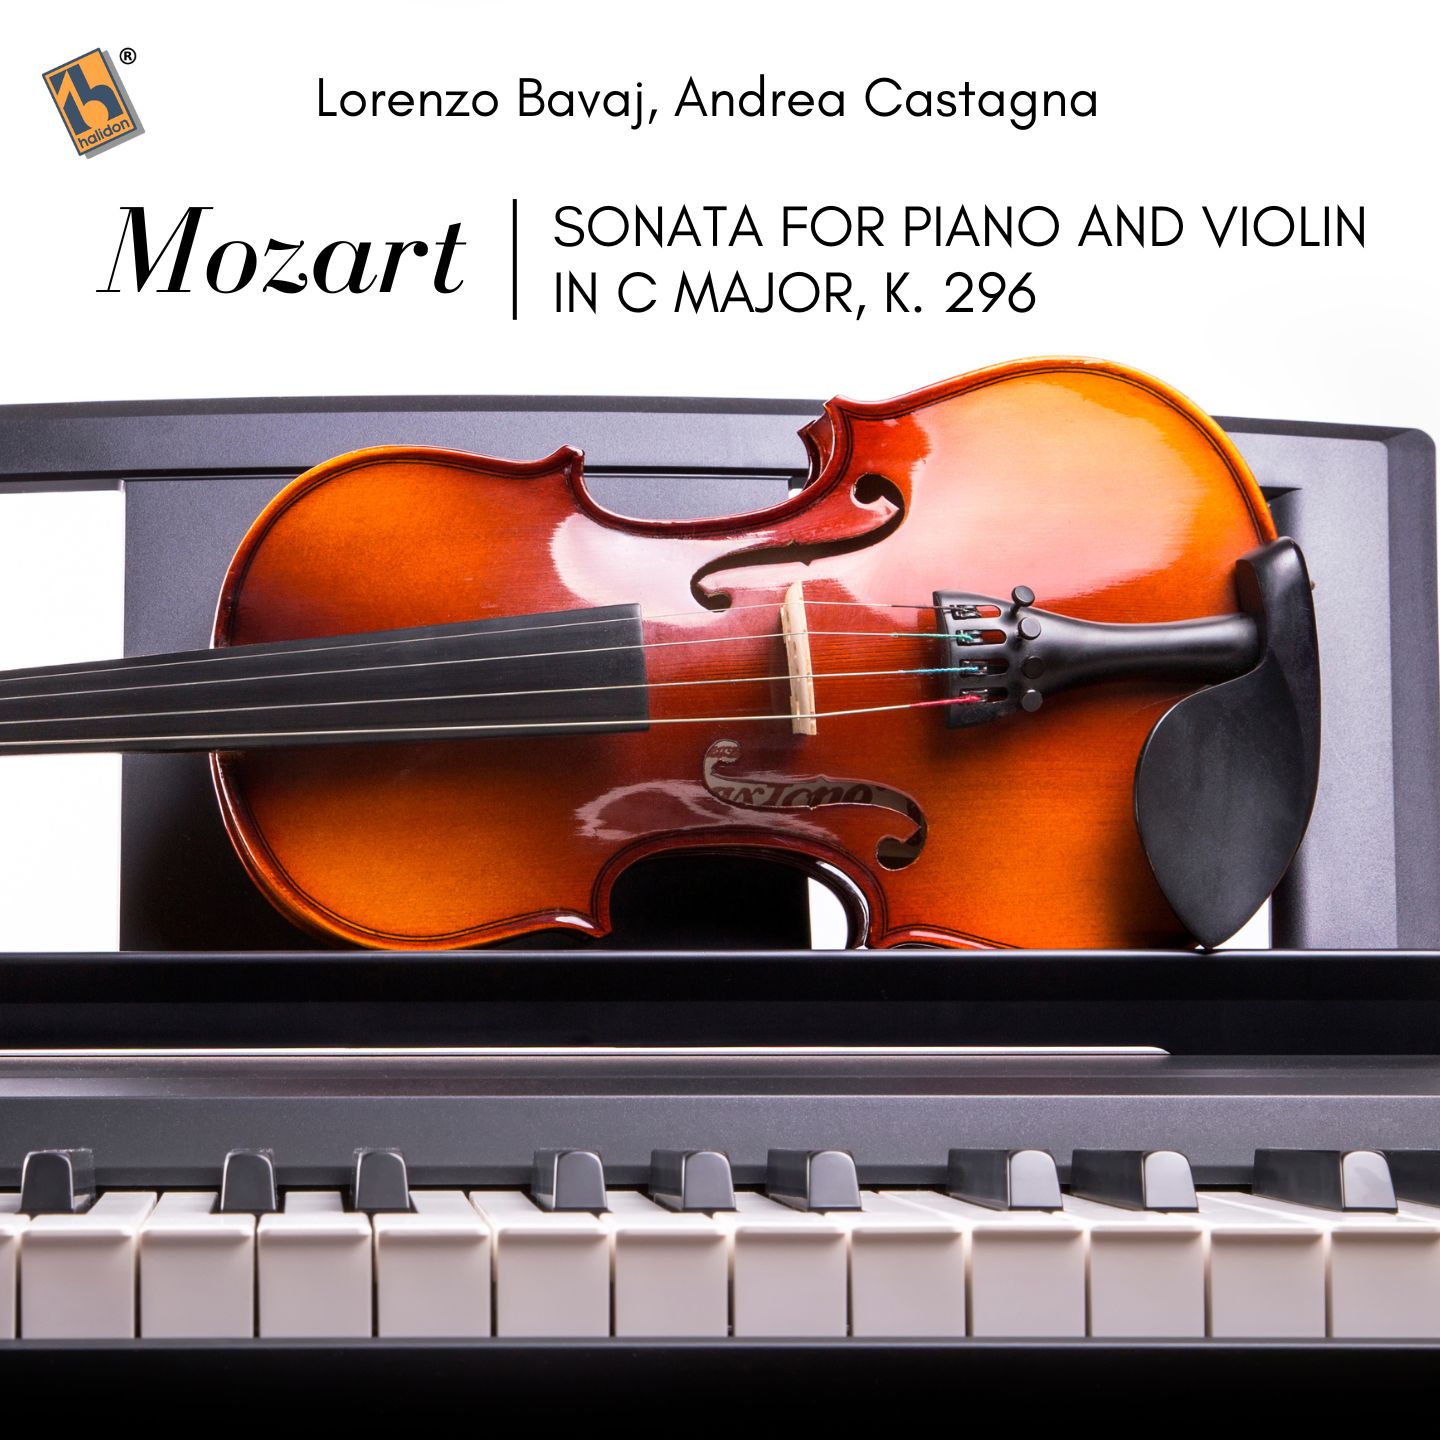 Sonata for Piano and Violin in C major, K. 296